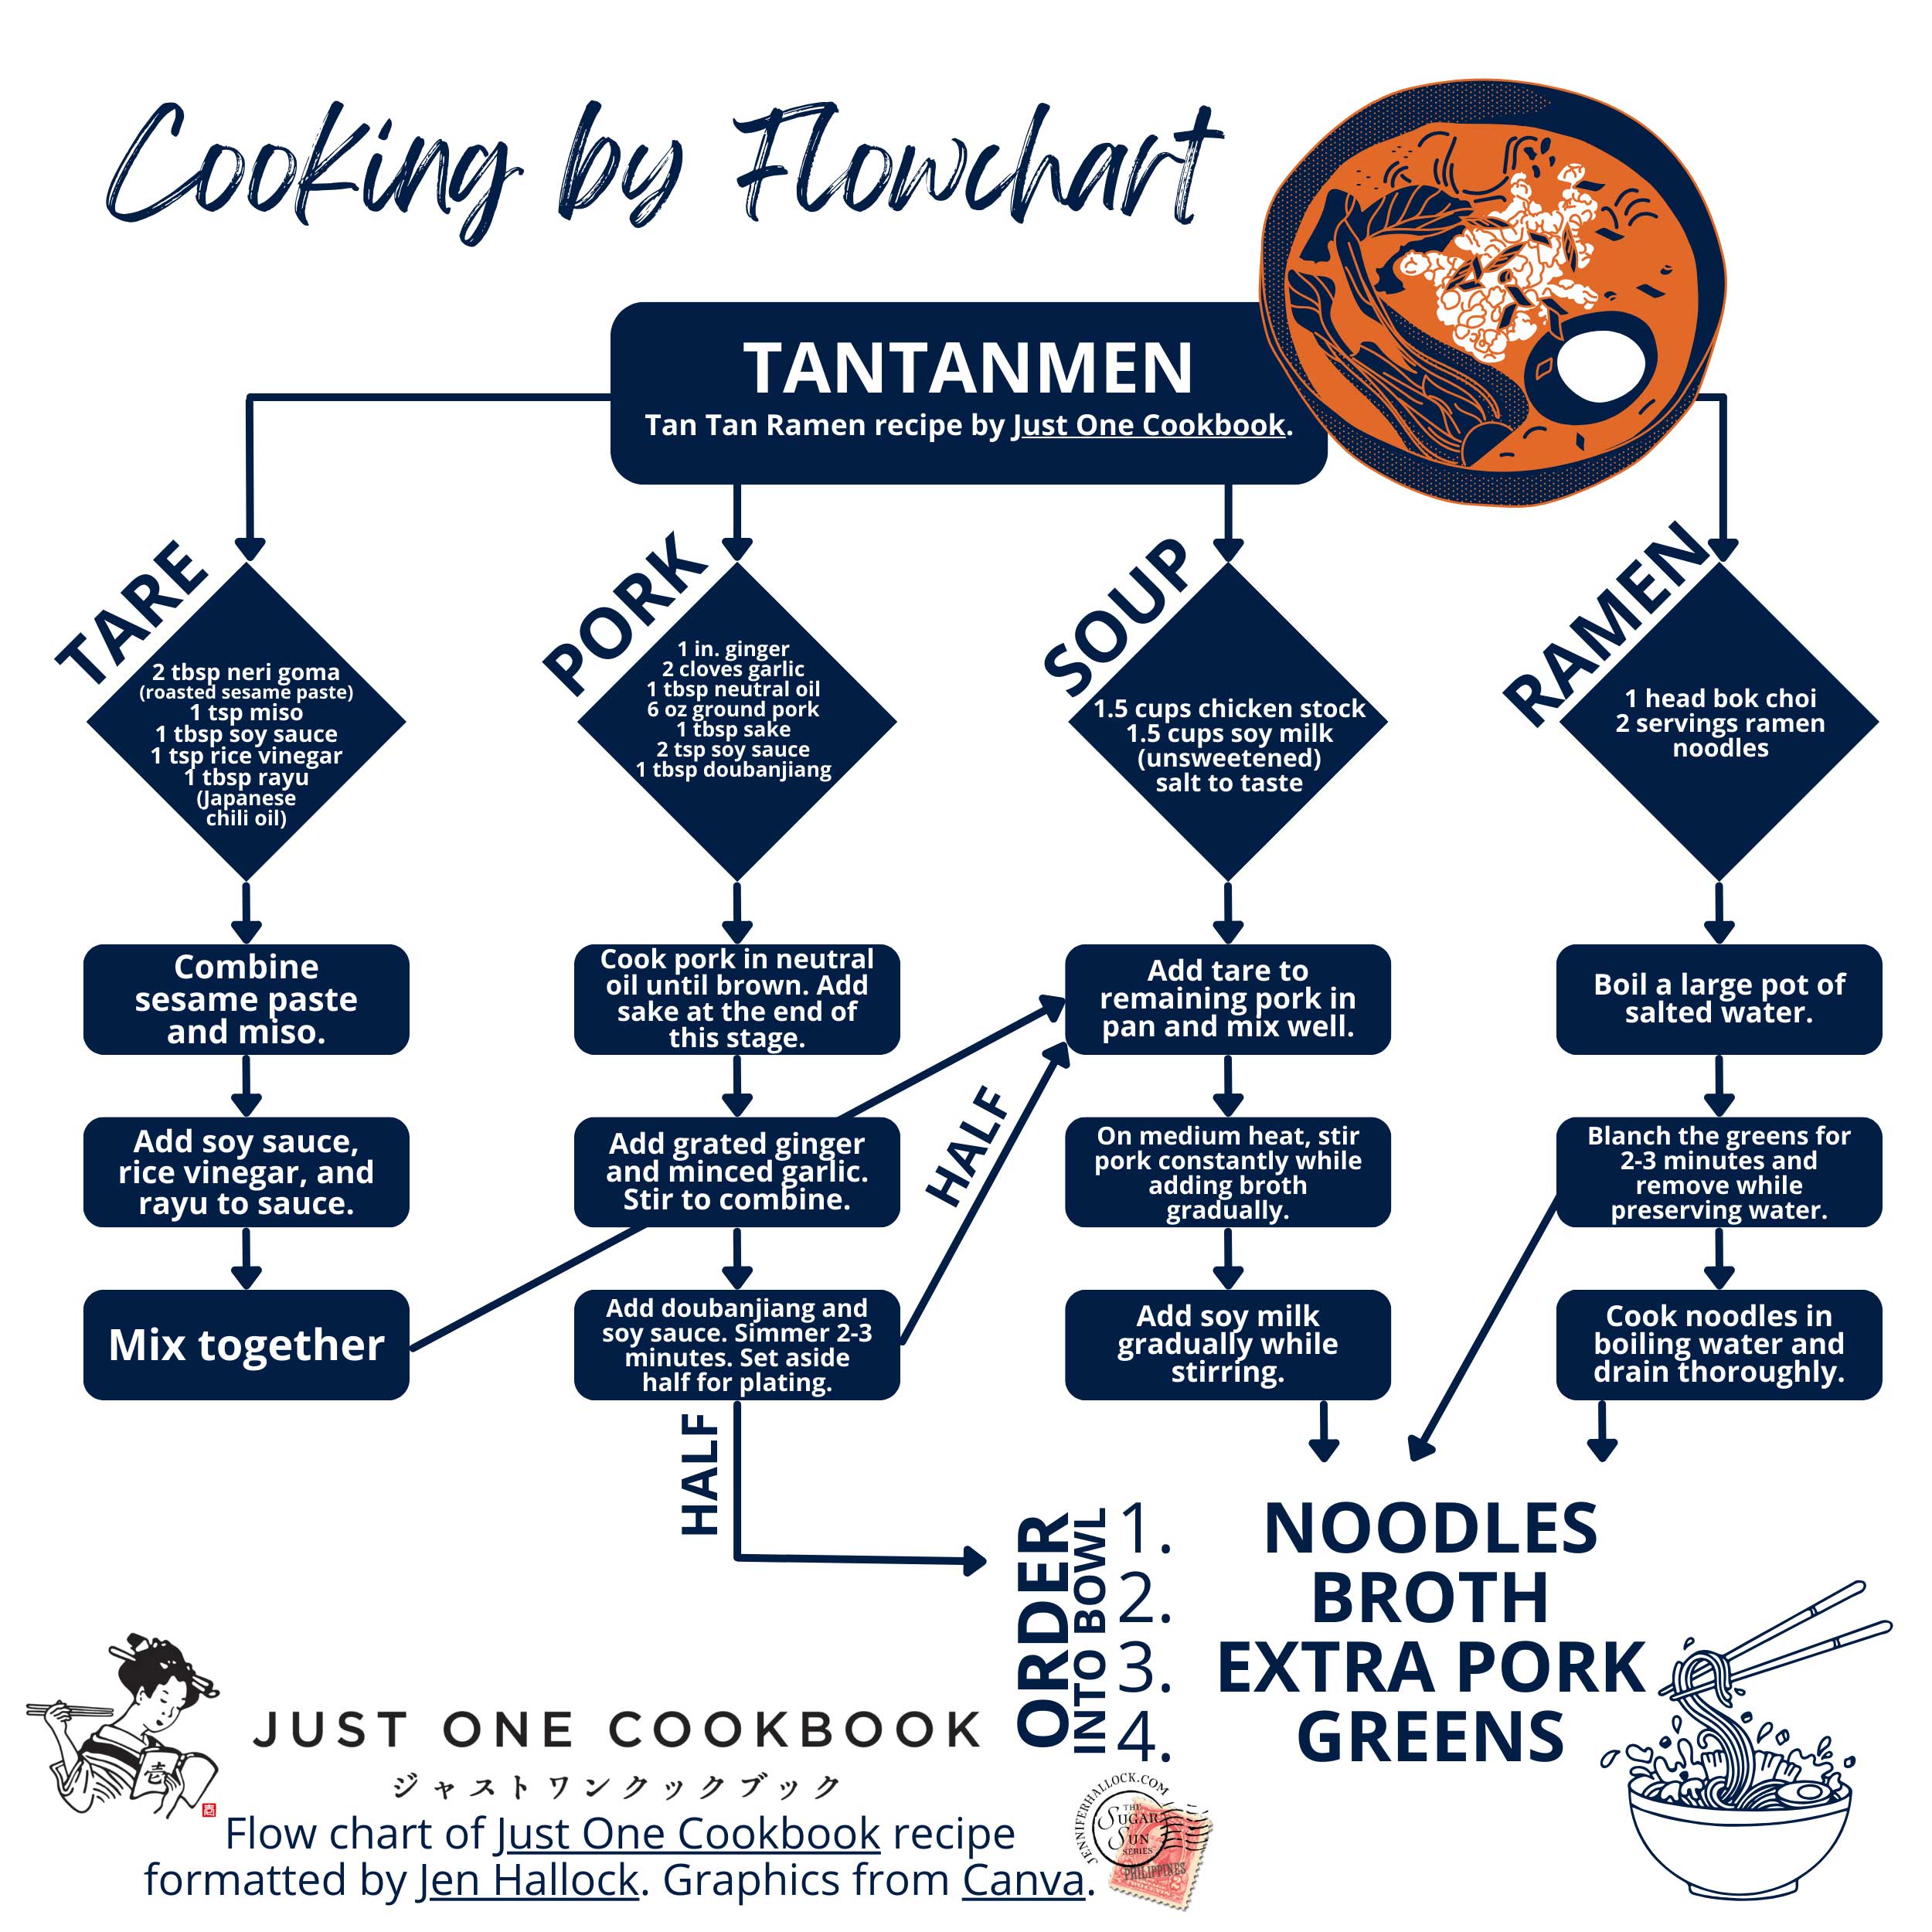 Cooking by Flowchart recipe of tantanmen ramen.